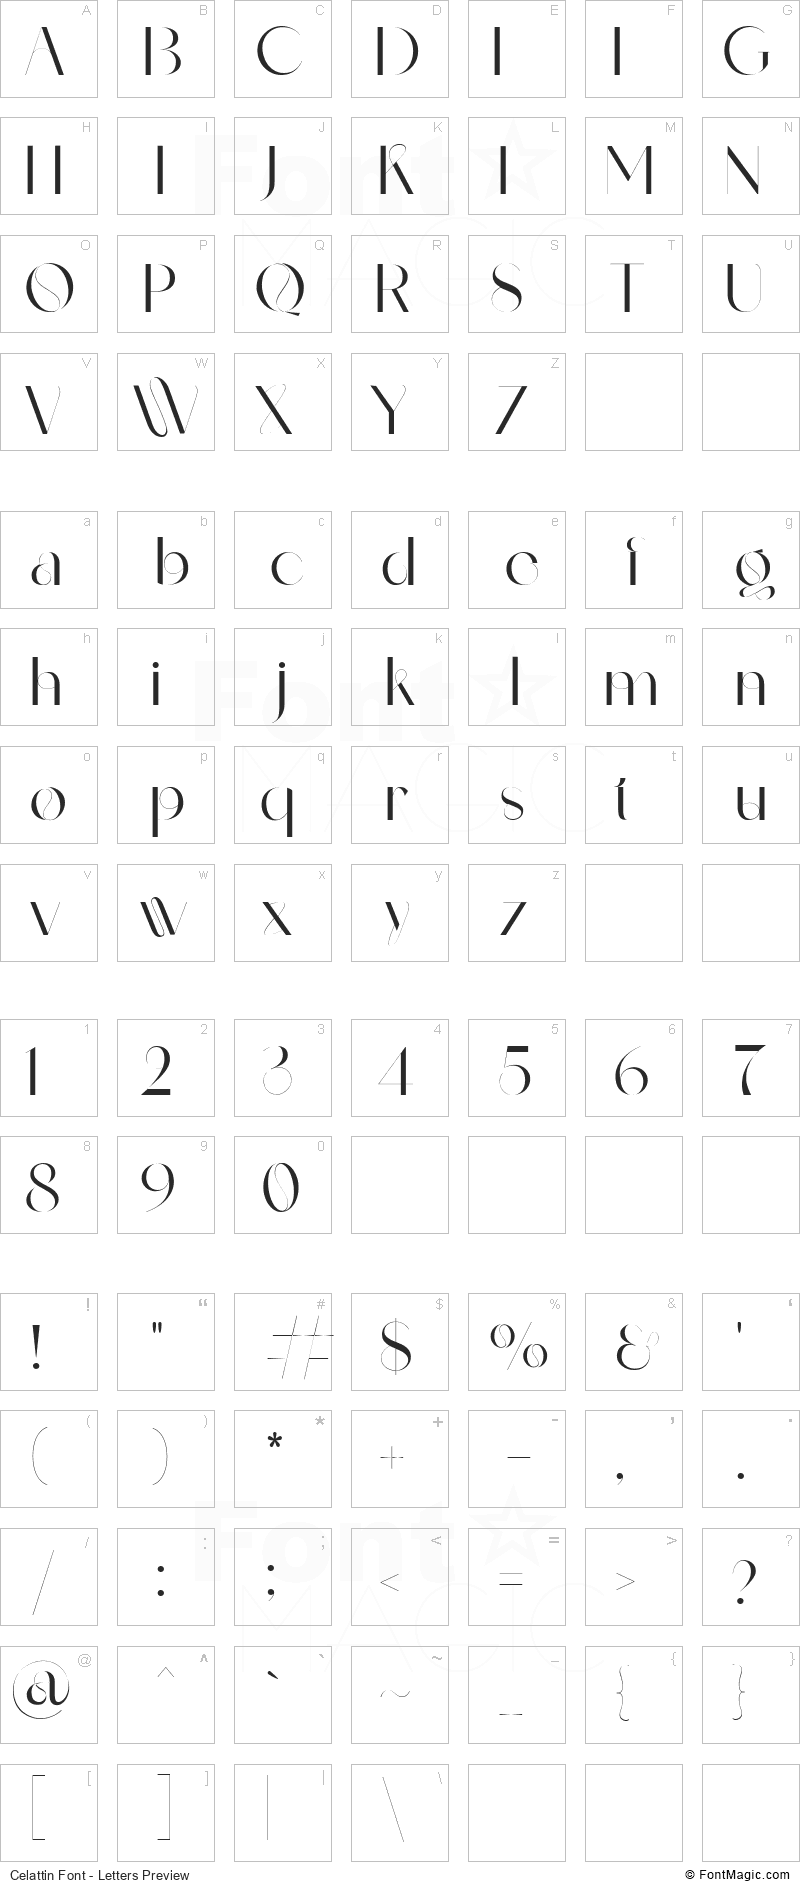 Celattin Font - All Latters Preview Chart